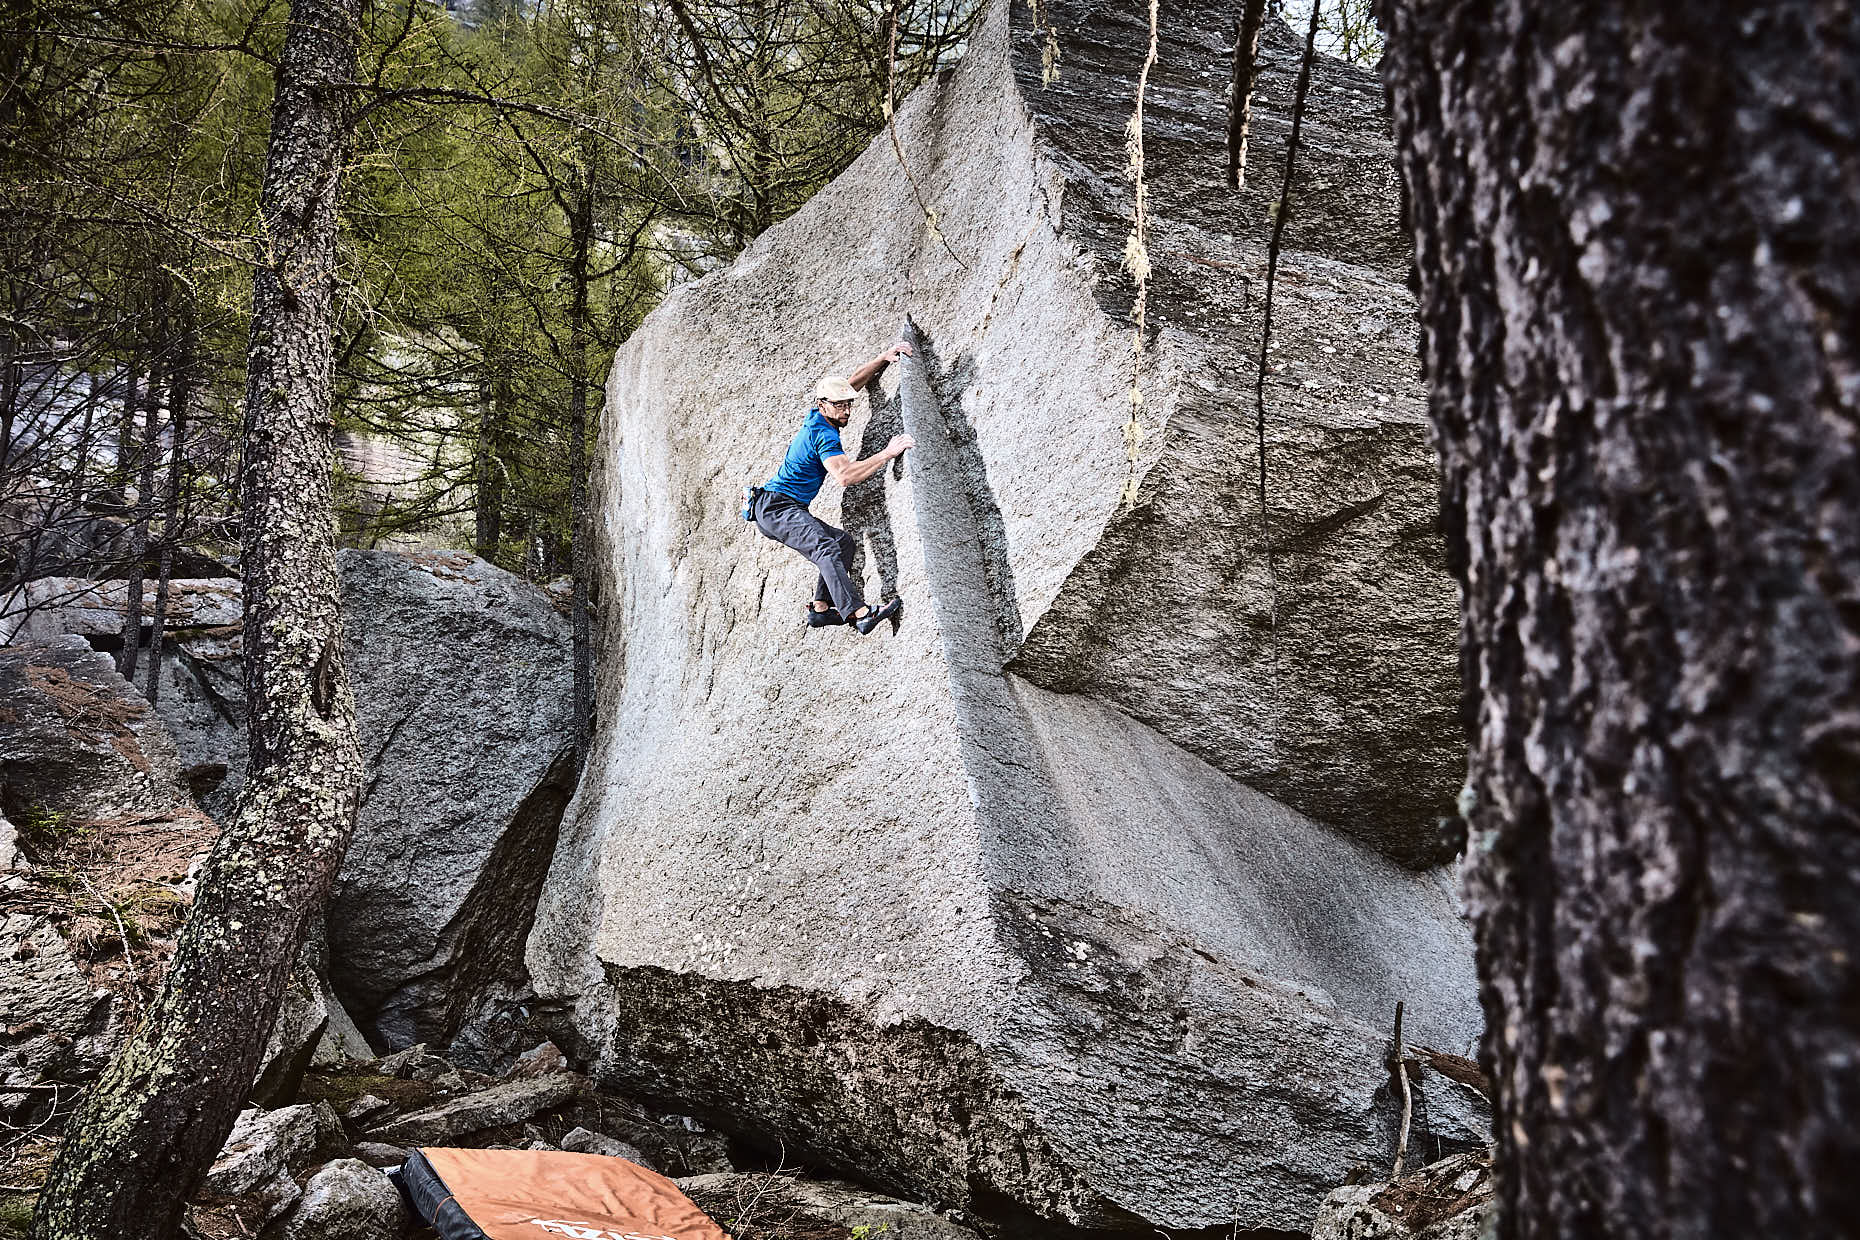 Bernd Zangerl | Stefan Kuerzi - Climbing Photography